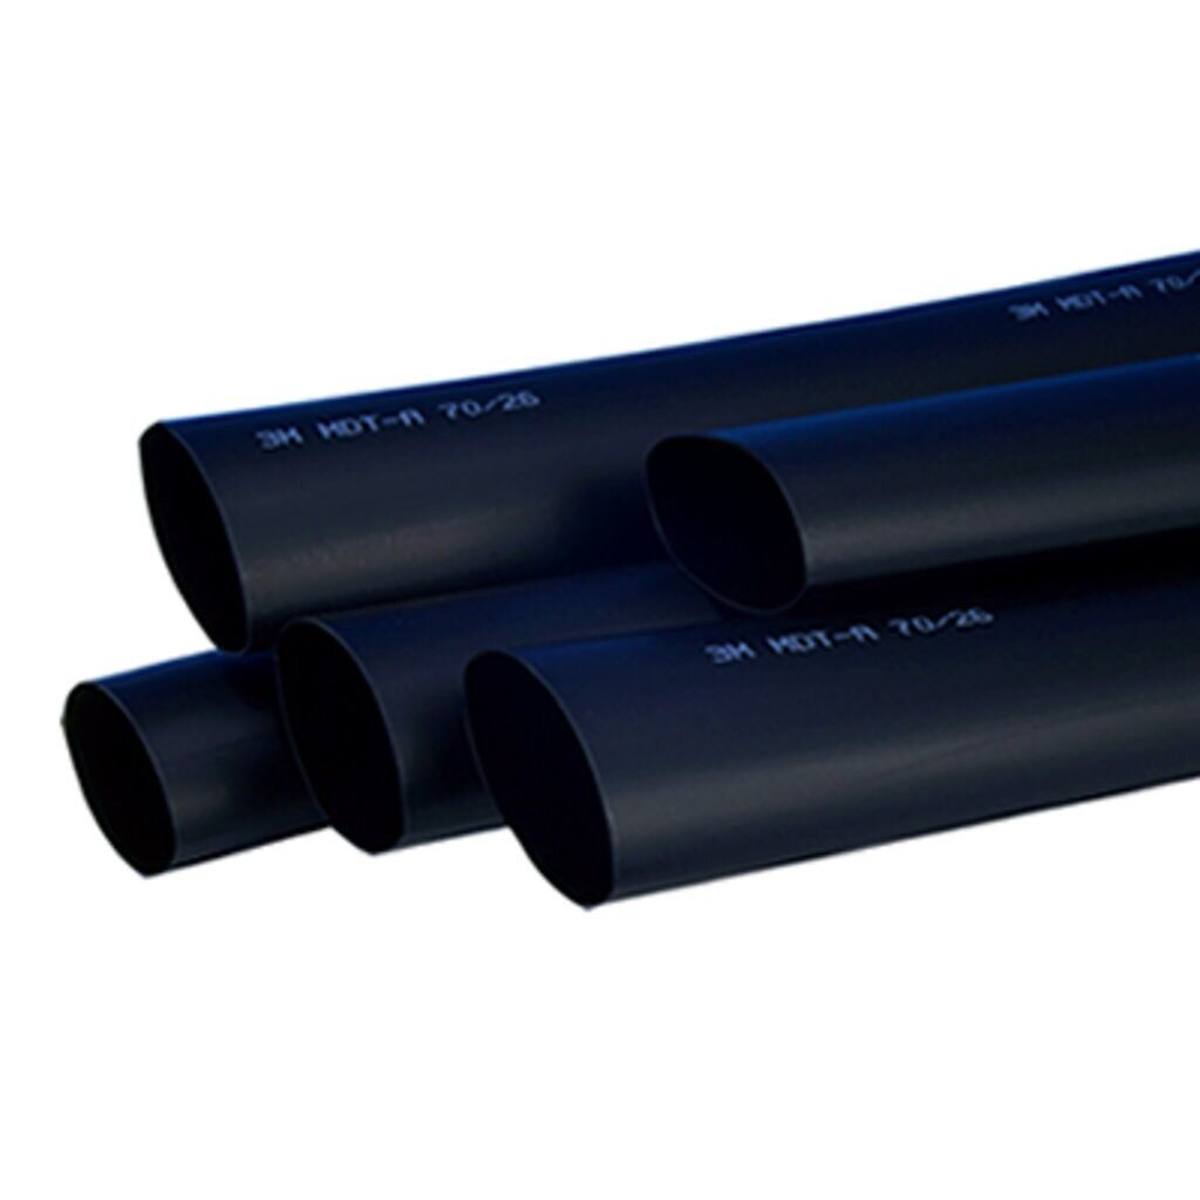 3M MDT-A Medium wall heat shrink tubing with adhesive, black, 19/6 mm, 1 m